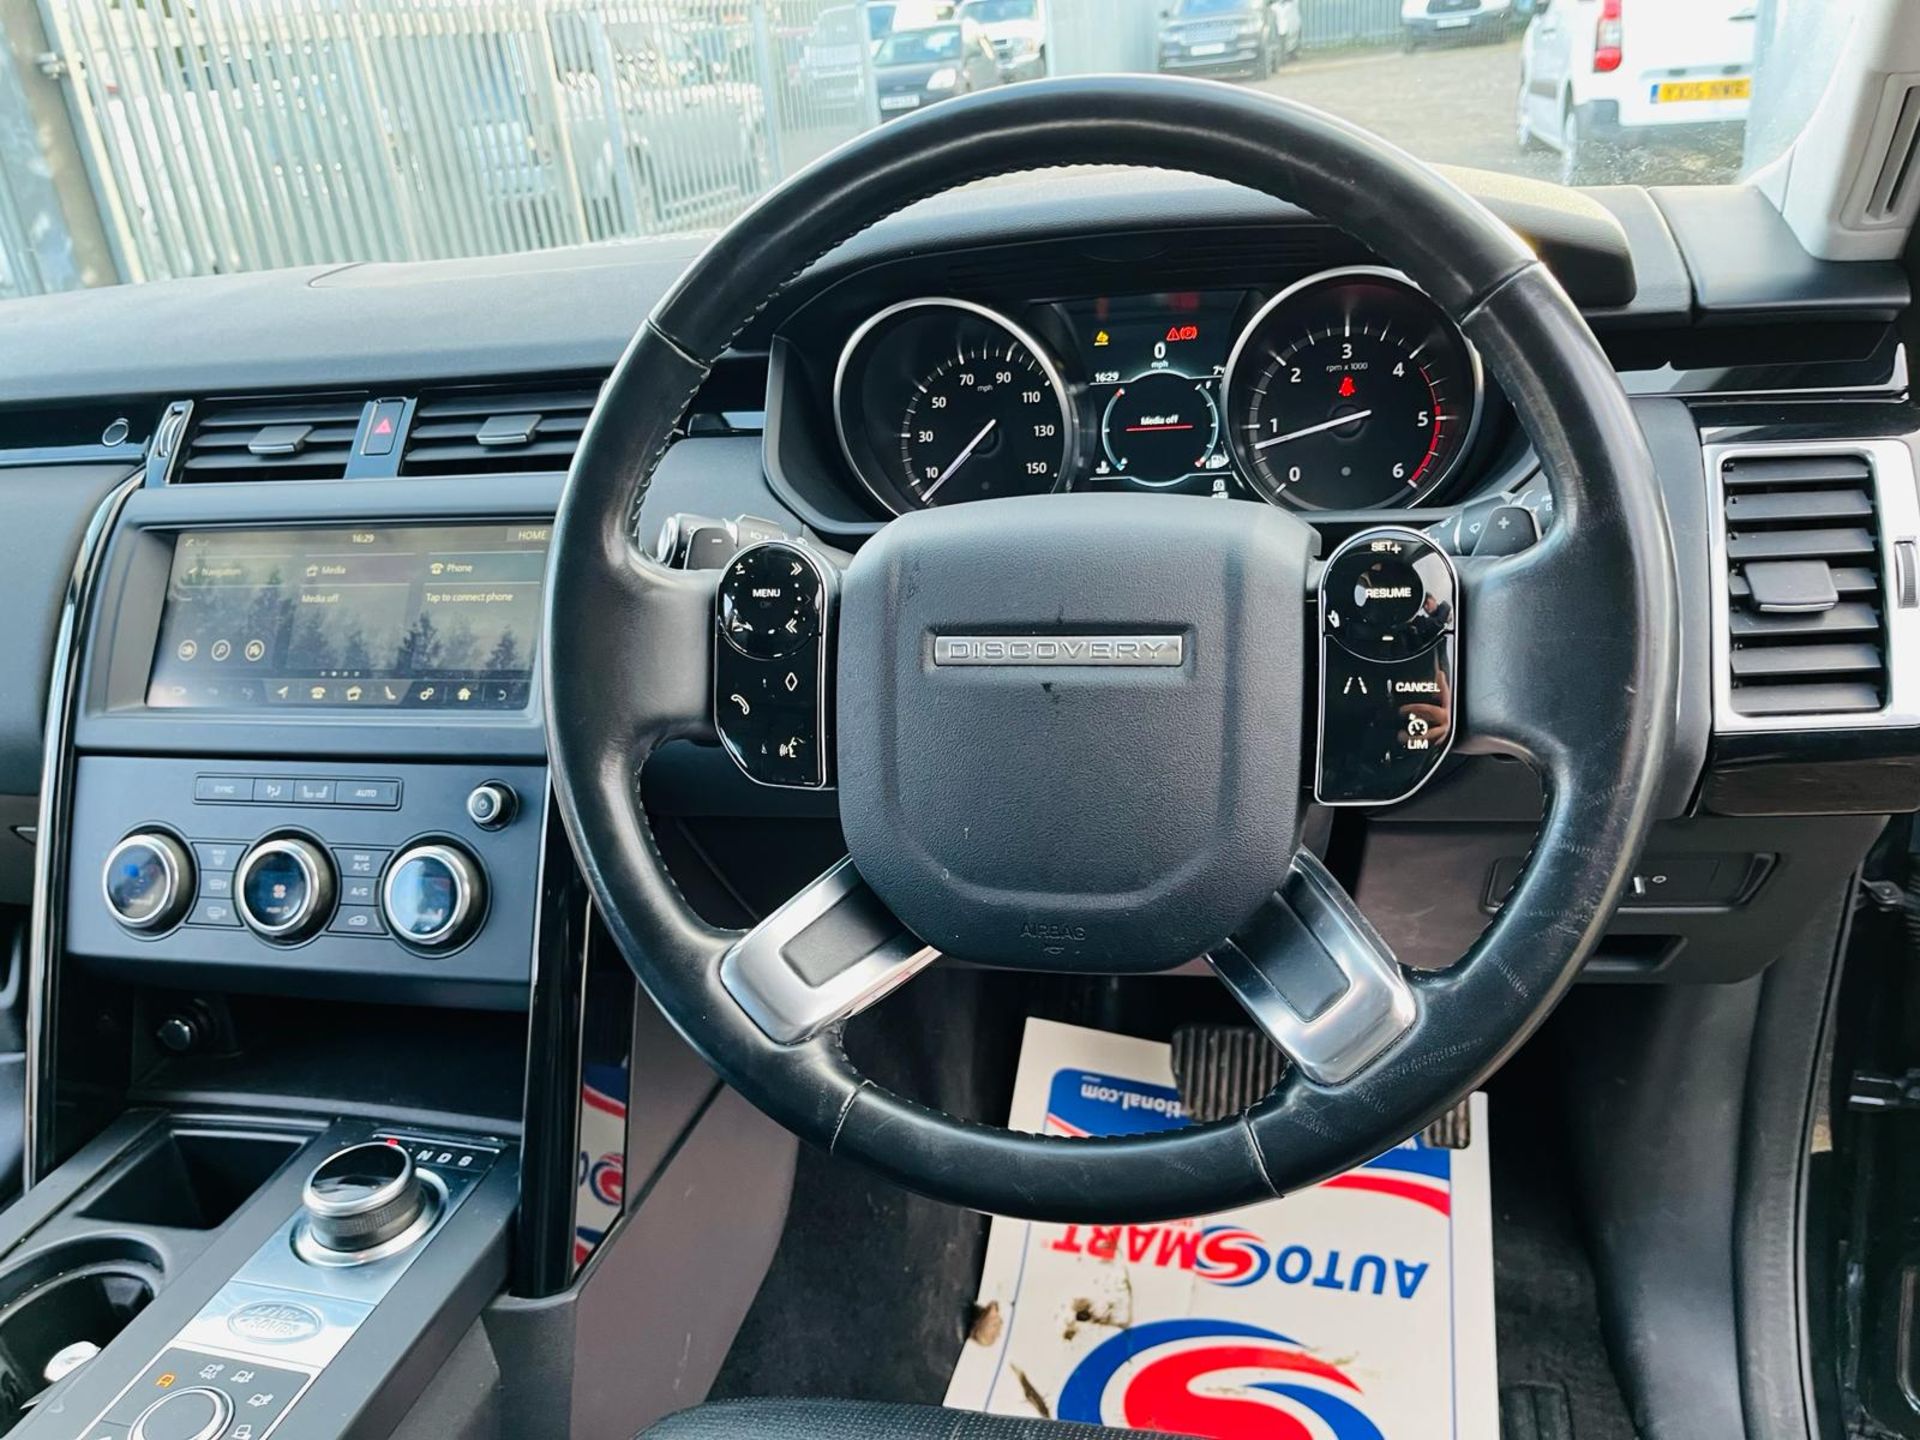 Land Rover Discovery 5 SE 3.0 SDV6 305 2019 '19 Reg' - Sat Nav - A/C - 4WD - ULEZ Compliant - Image 15 of 31